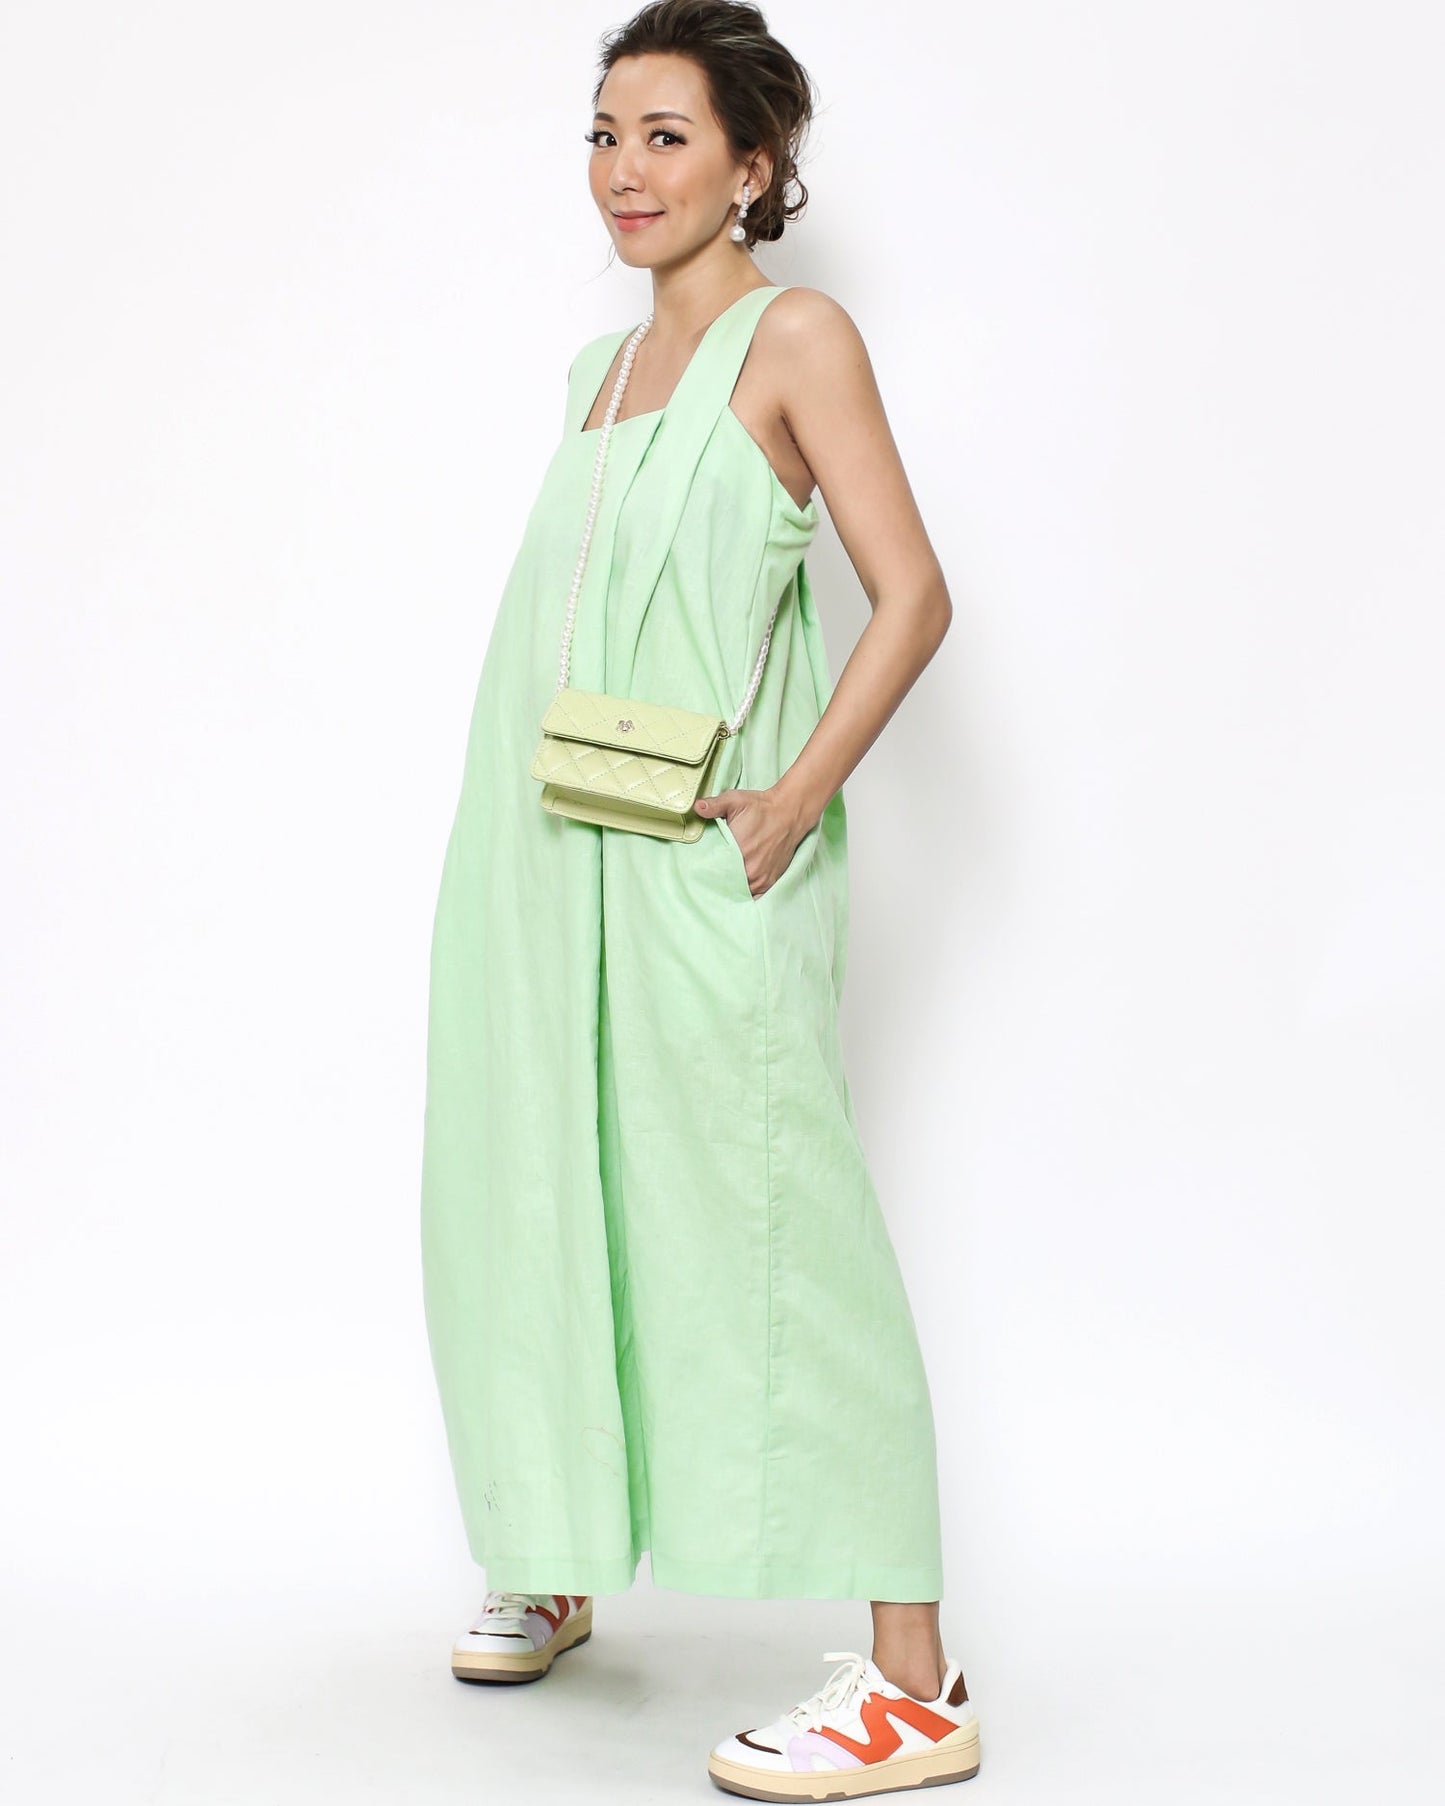 light green linen strappy dress *pre-order*